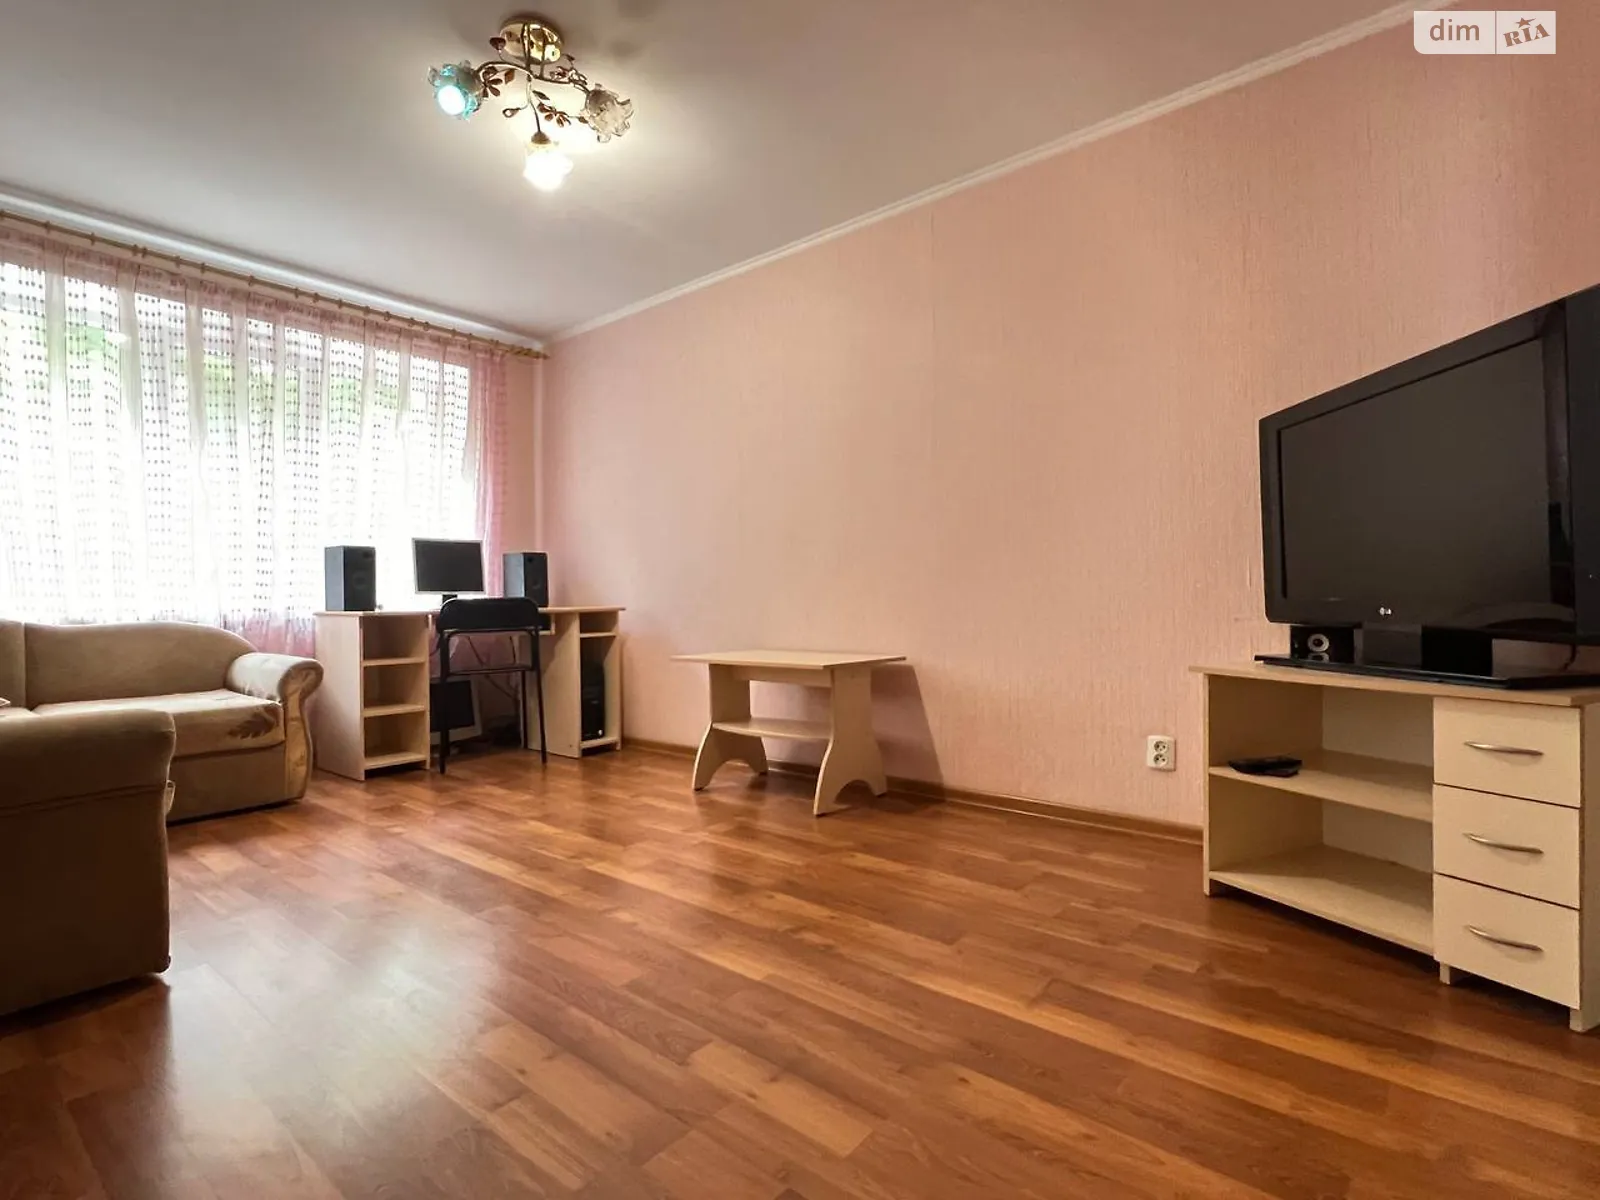 Сдается в аренду 2-комнатная квартира 48 кв. м в Ровно - фото 1